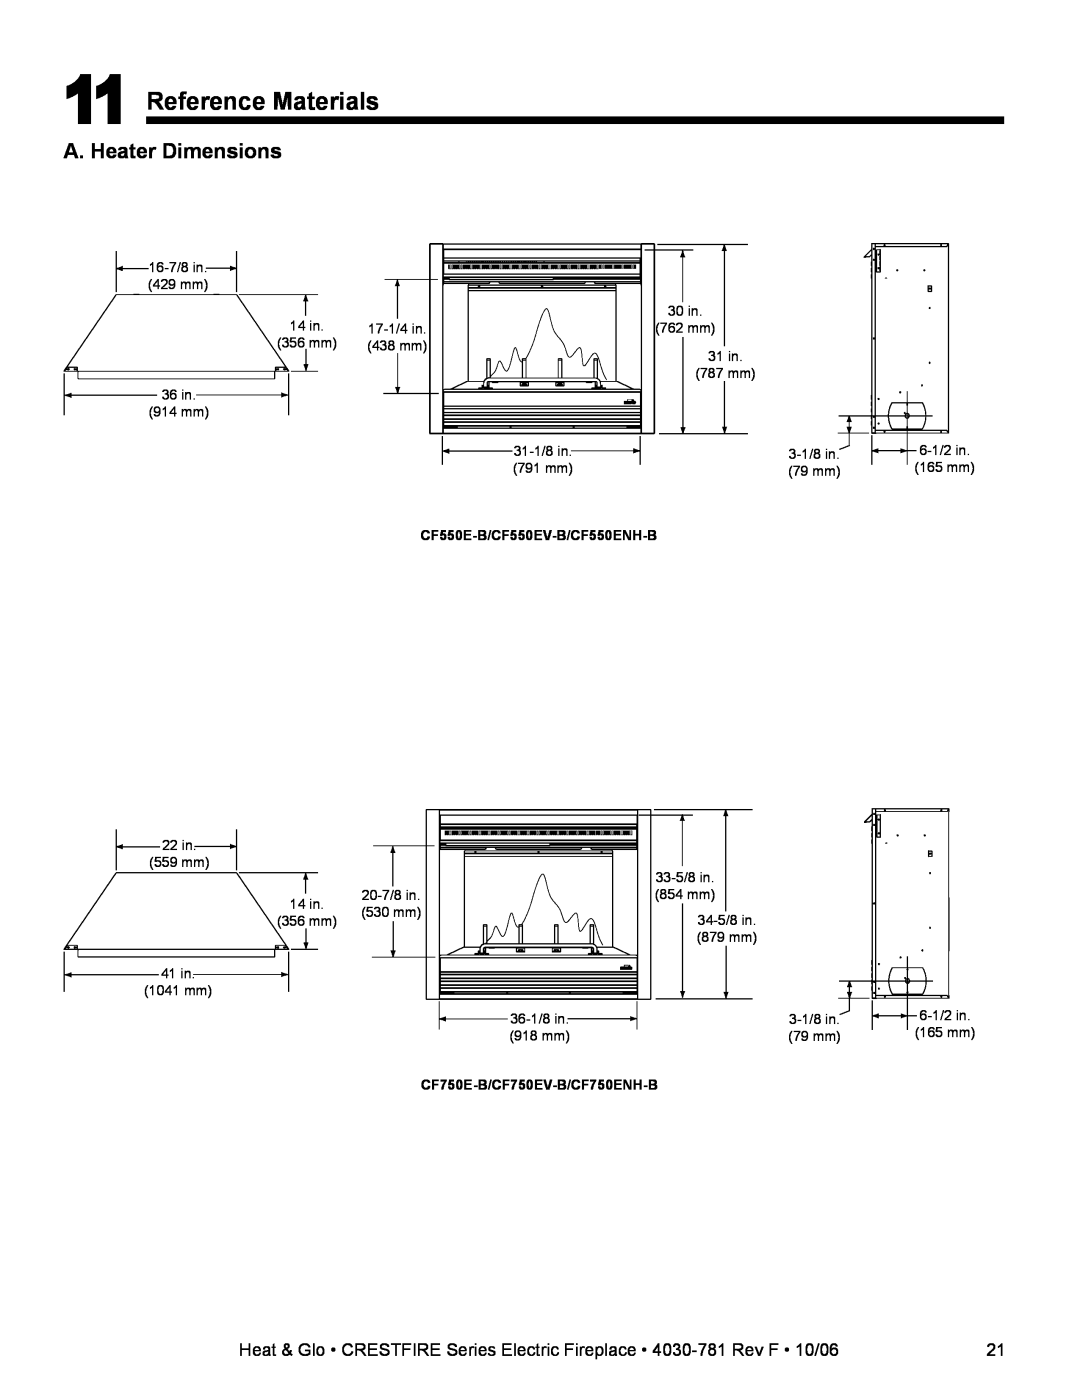 Heat & Glo LifeStyle owner manual Reference Materials, A. Heater Dimensions, CF550E-B/CF550EV-B/CF550ENH-B 